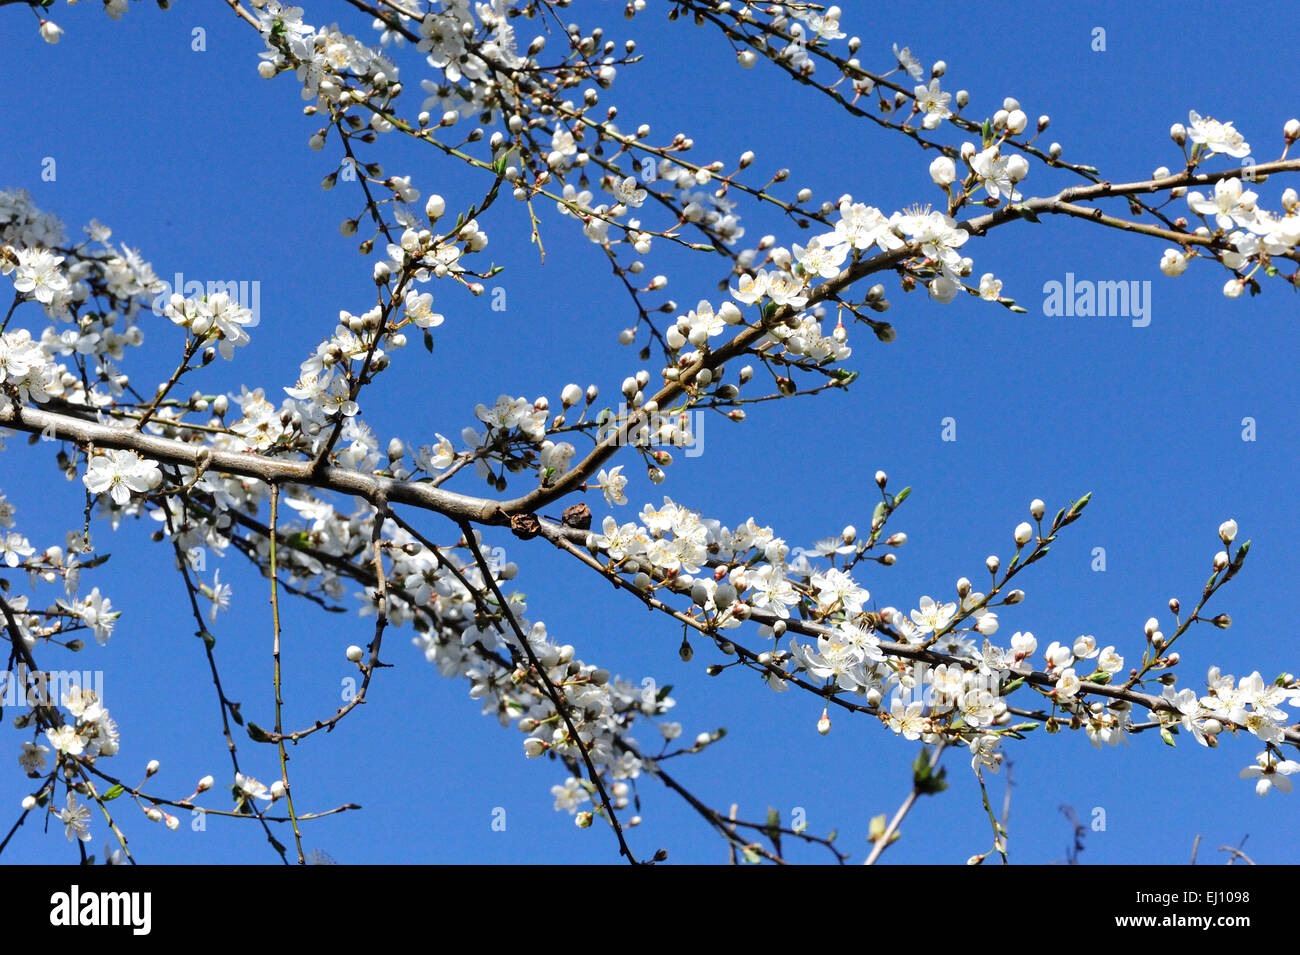 Blossoms, Flourishes, tree blossom, Spring, Fruit blossoms, Petals, blue, knows, Stock Photo